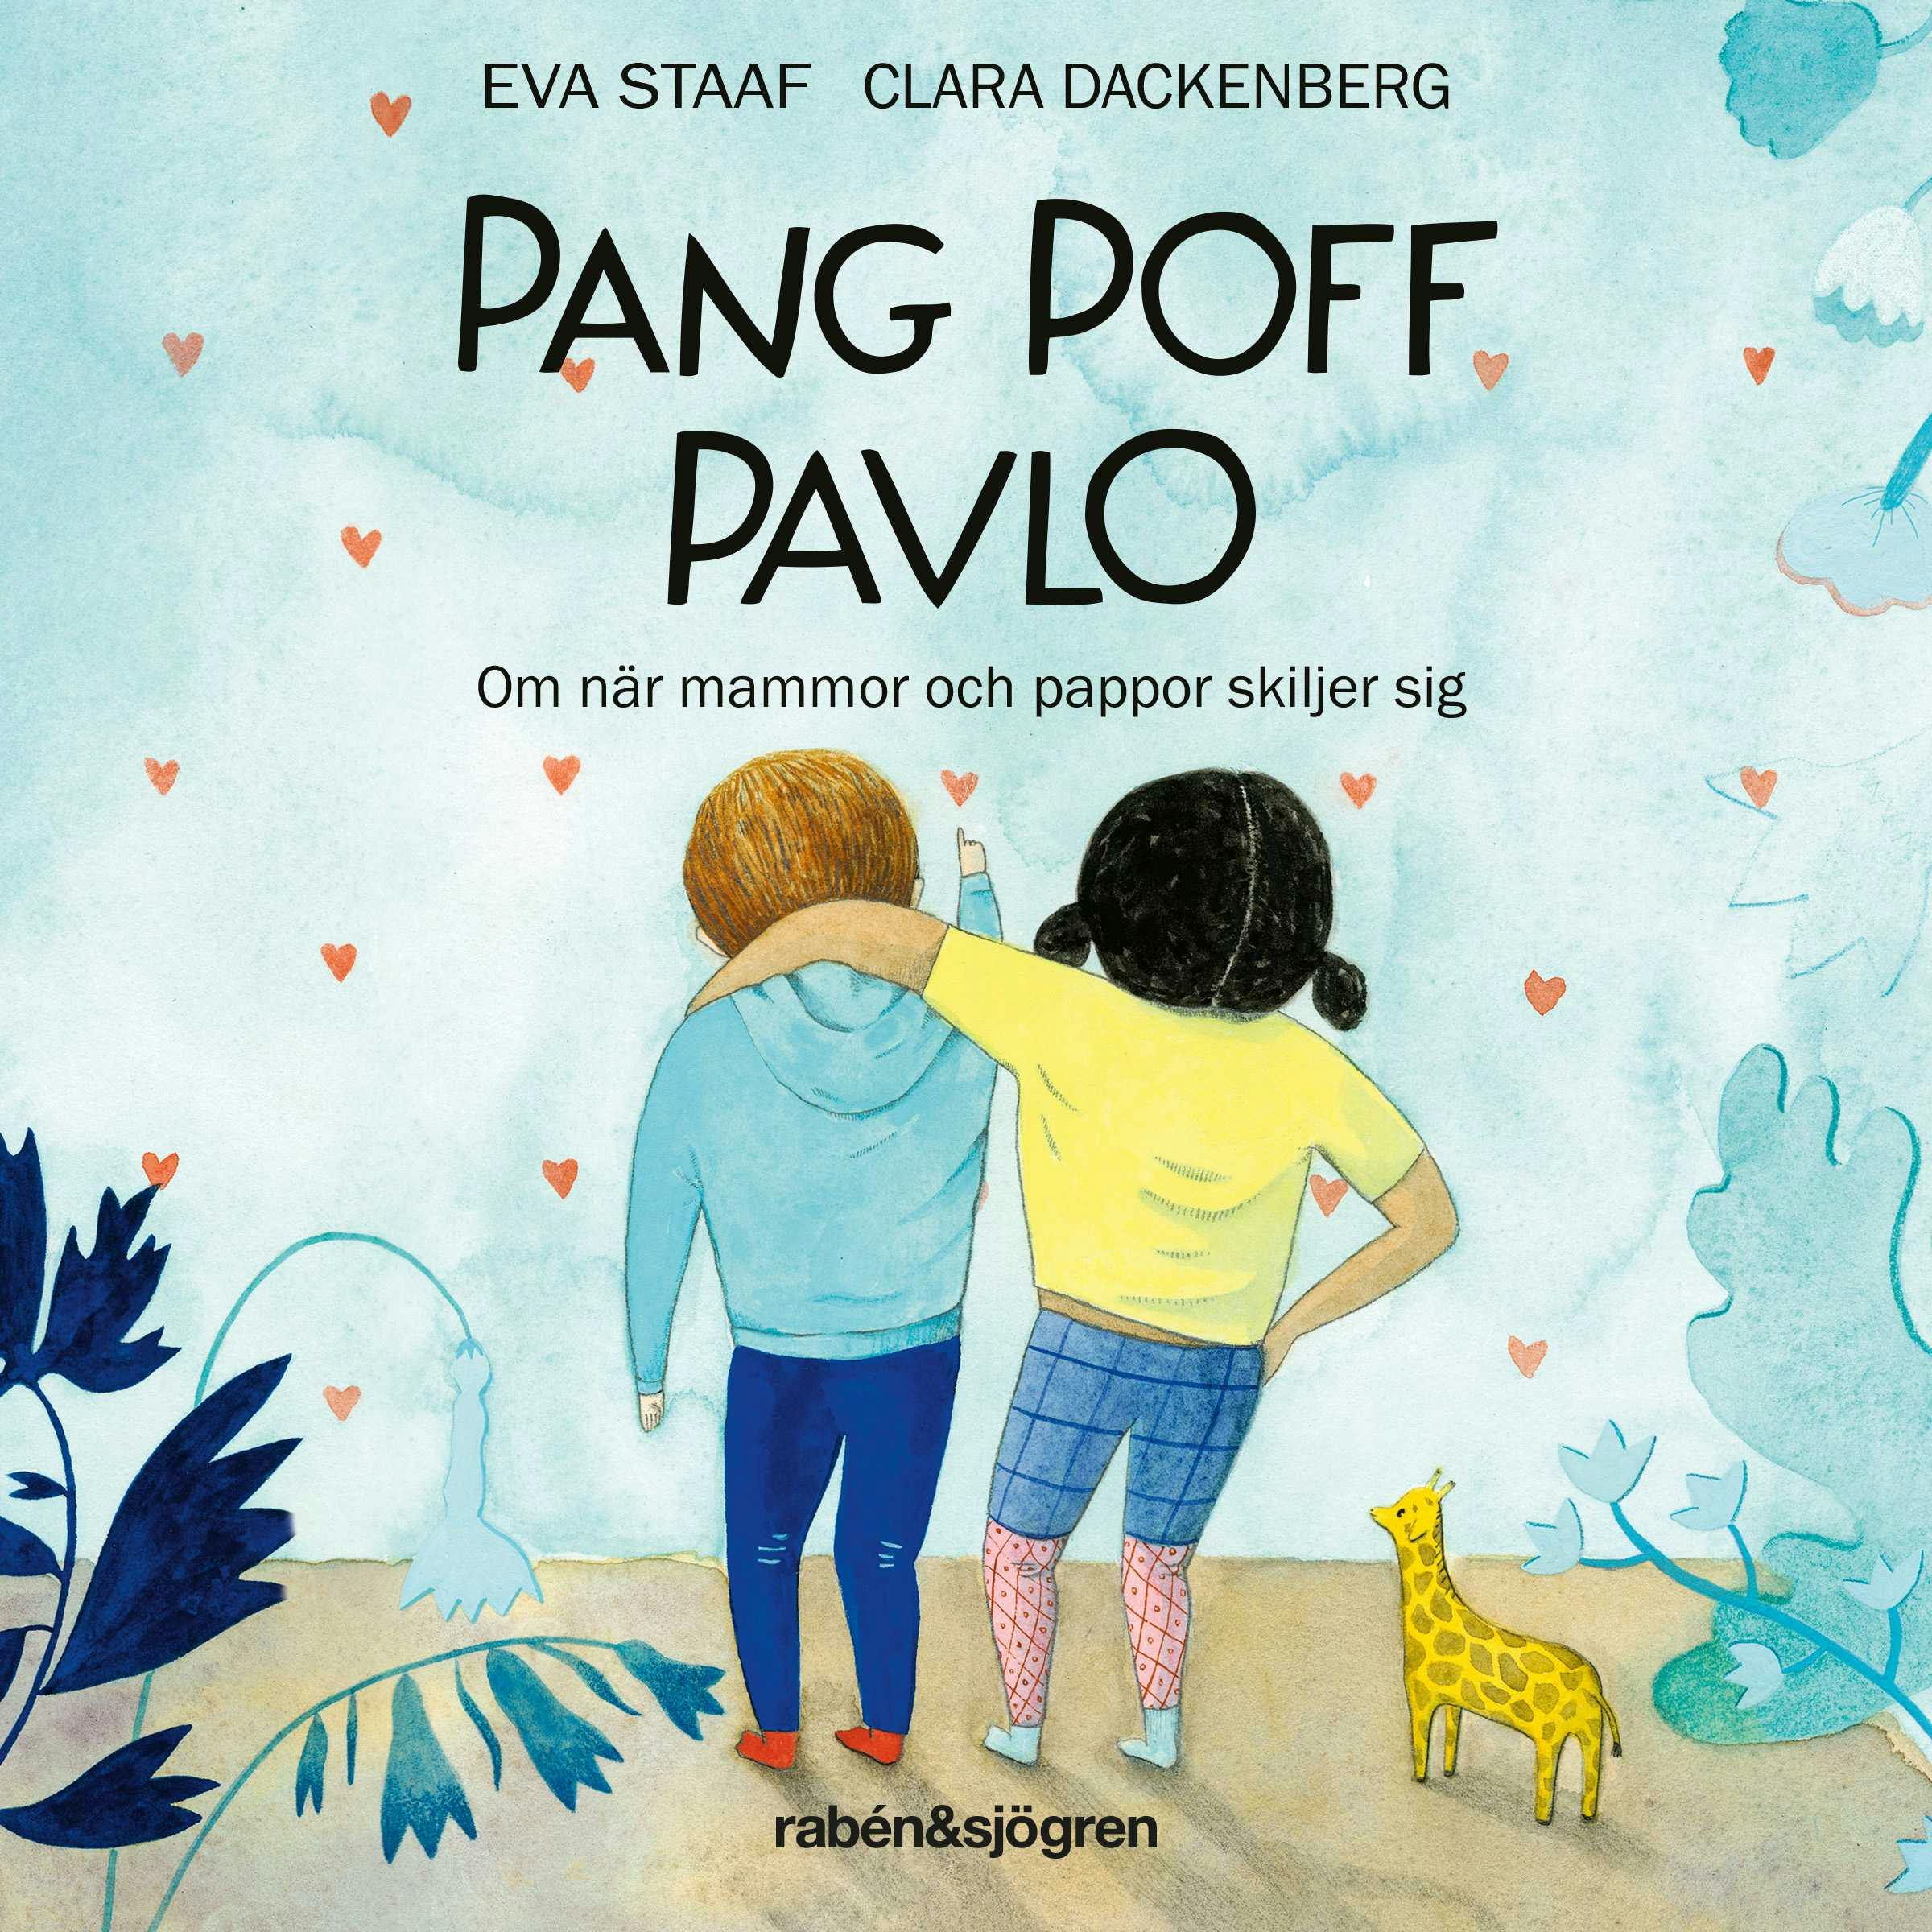 Pang poff Pavlo - undefined